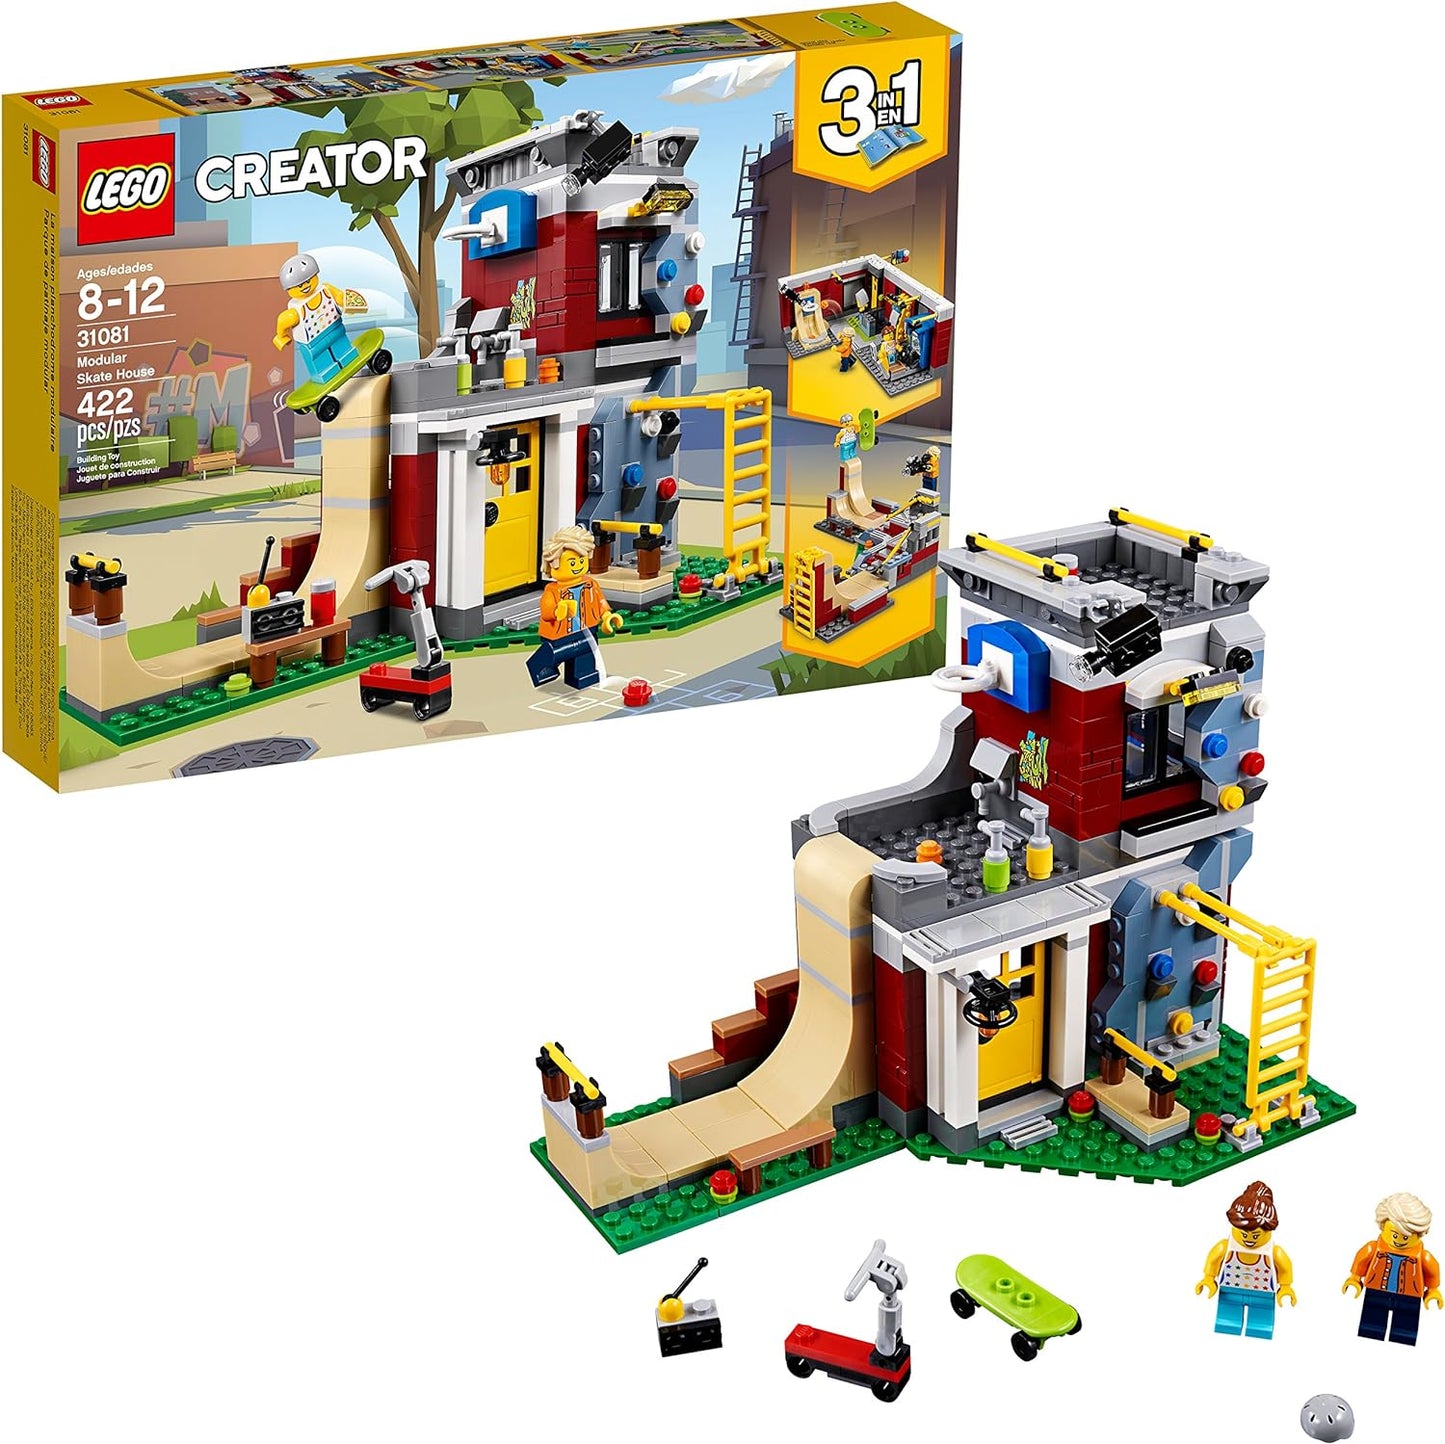 LEGO Creator 3in1 Modular Skate House 31081 Building Kit (422 Piece)